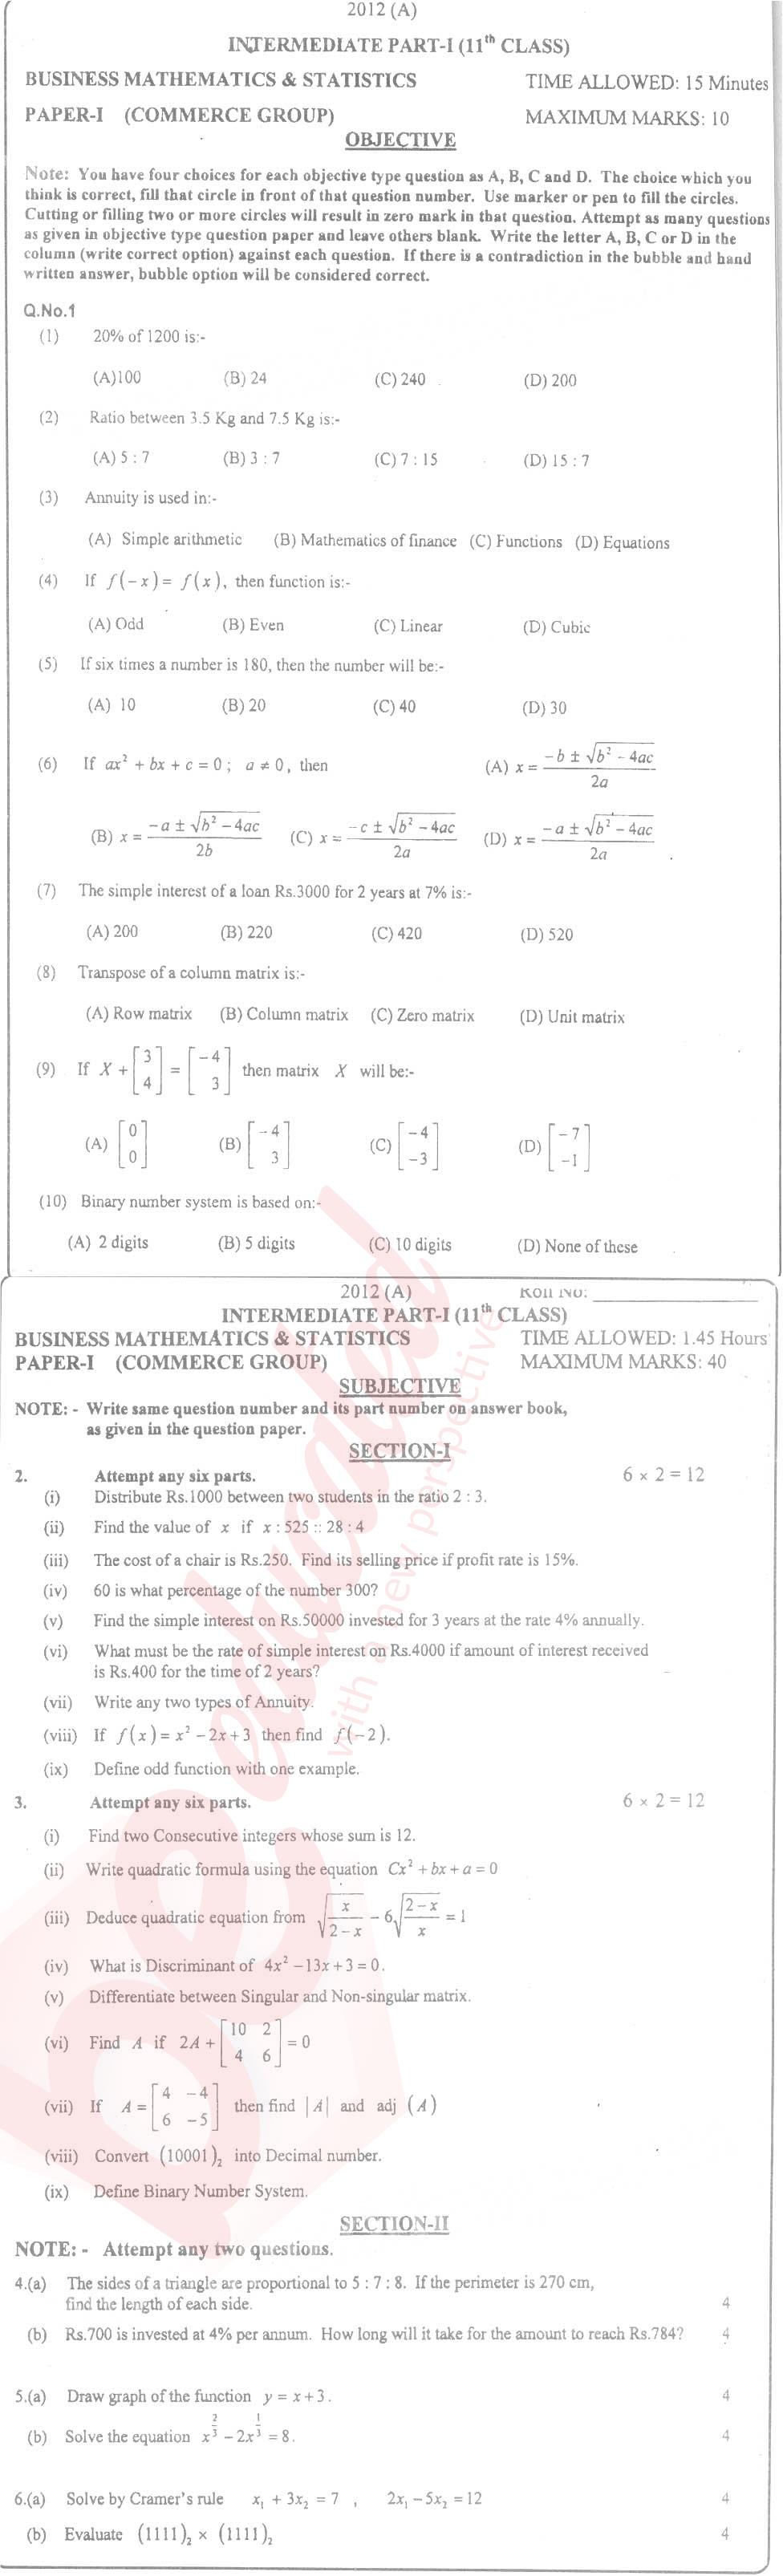 Business Mathematics ICOM Part 1 Past Paper Group 1 BISE Multan 2012